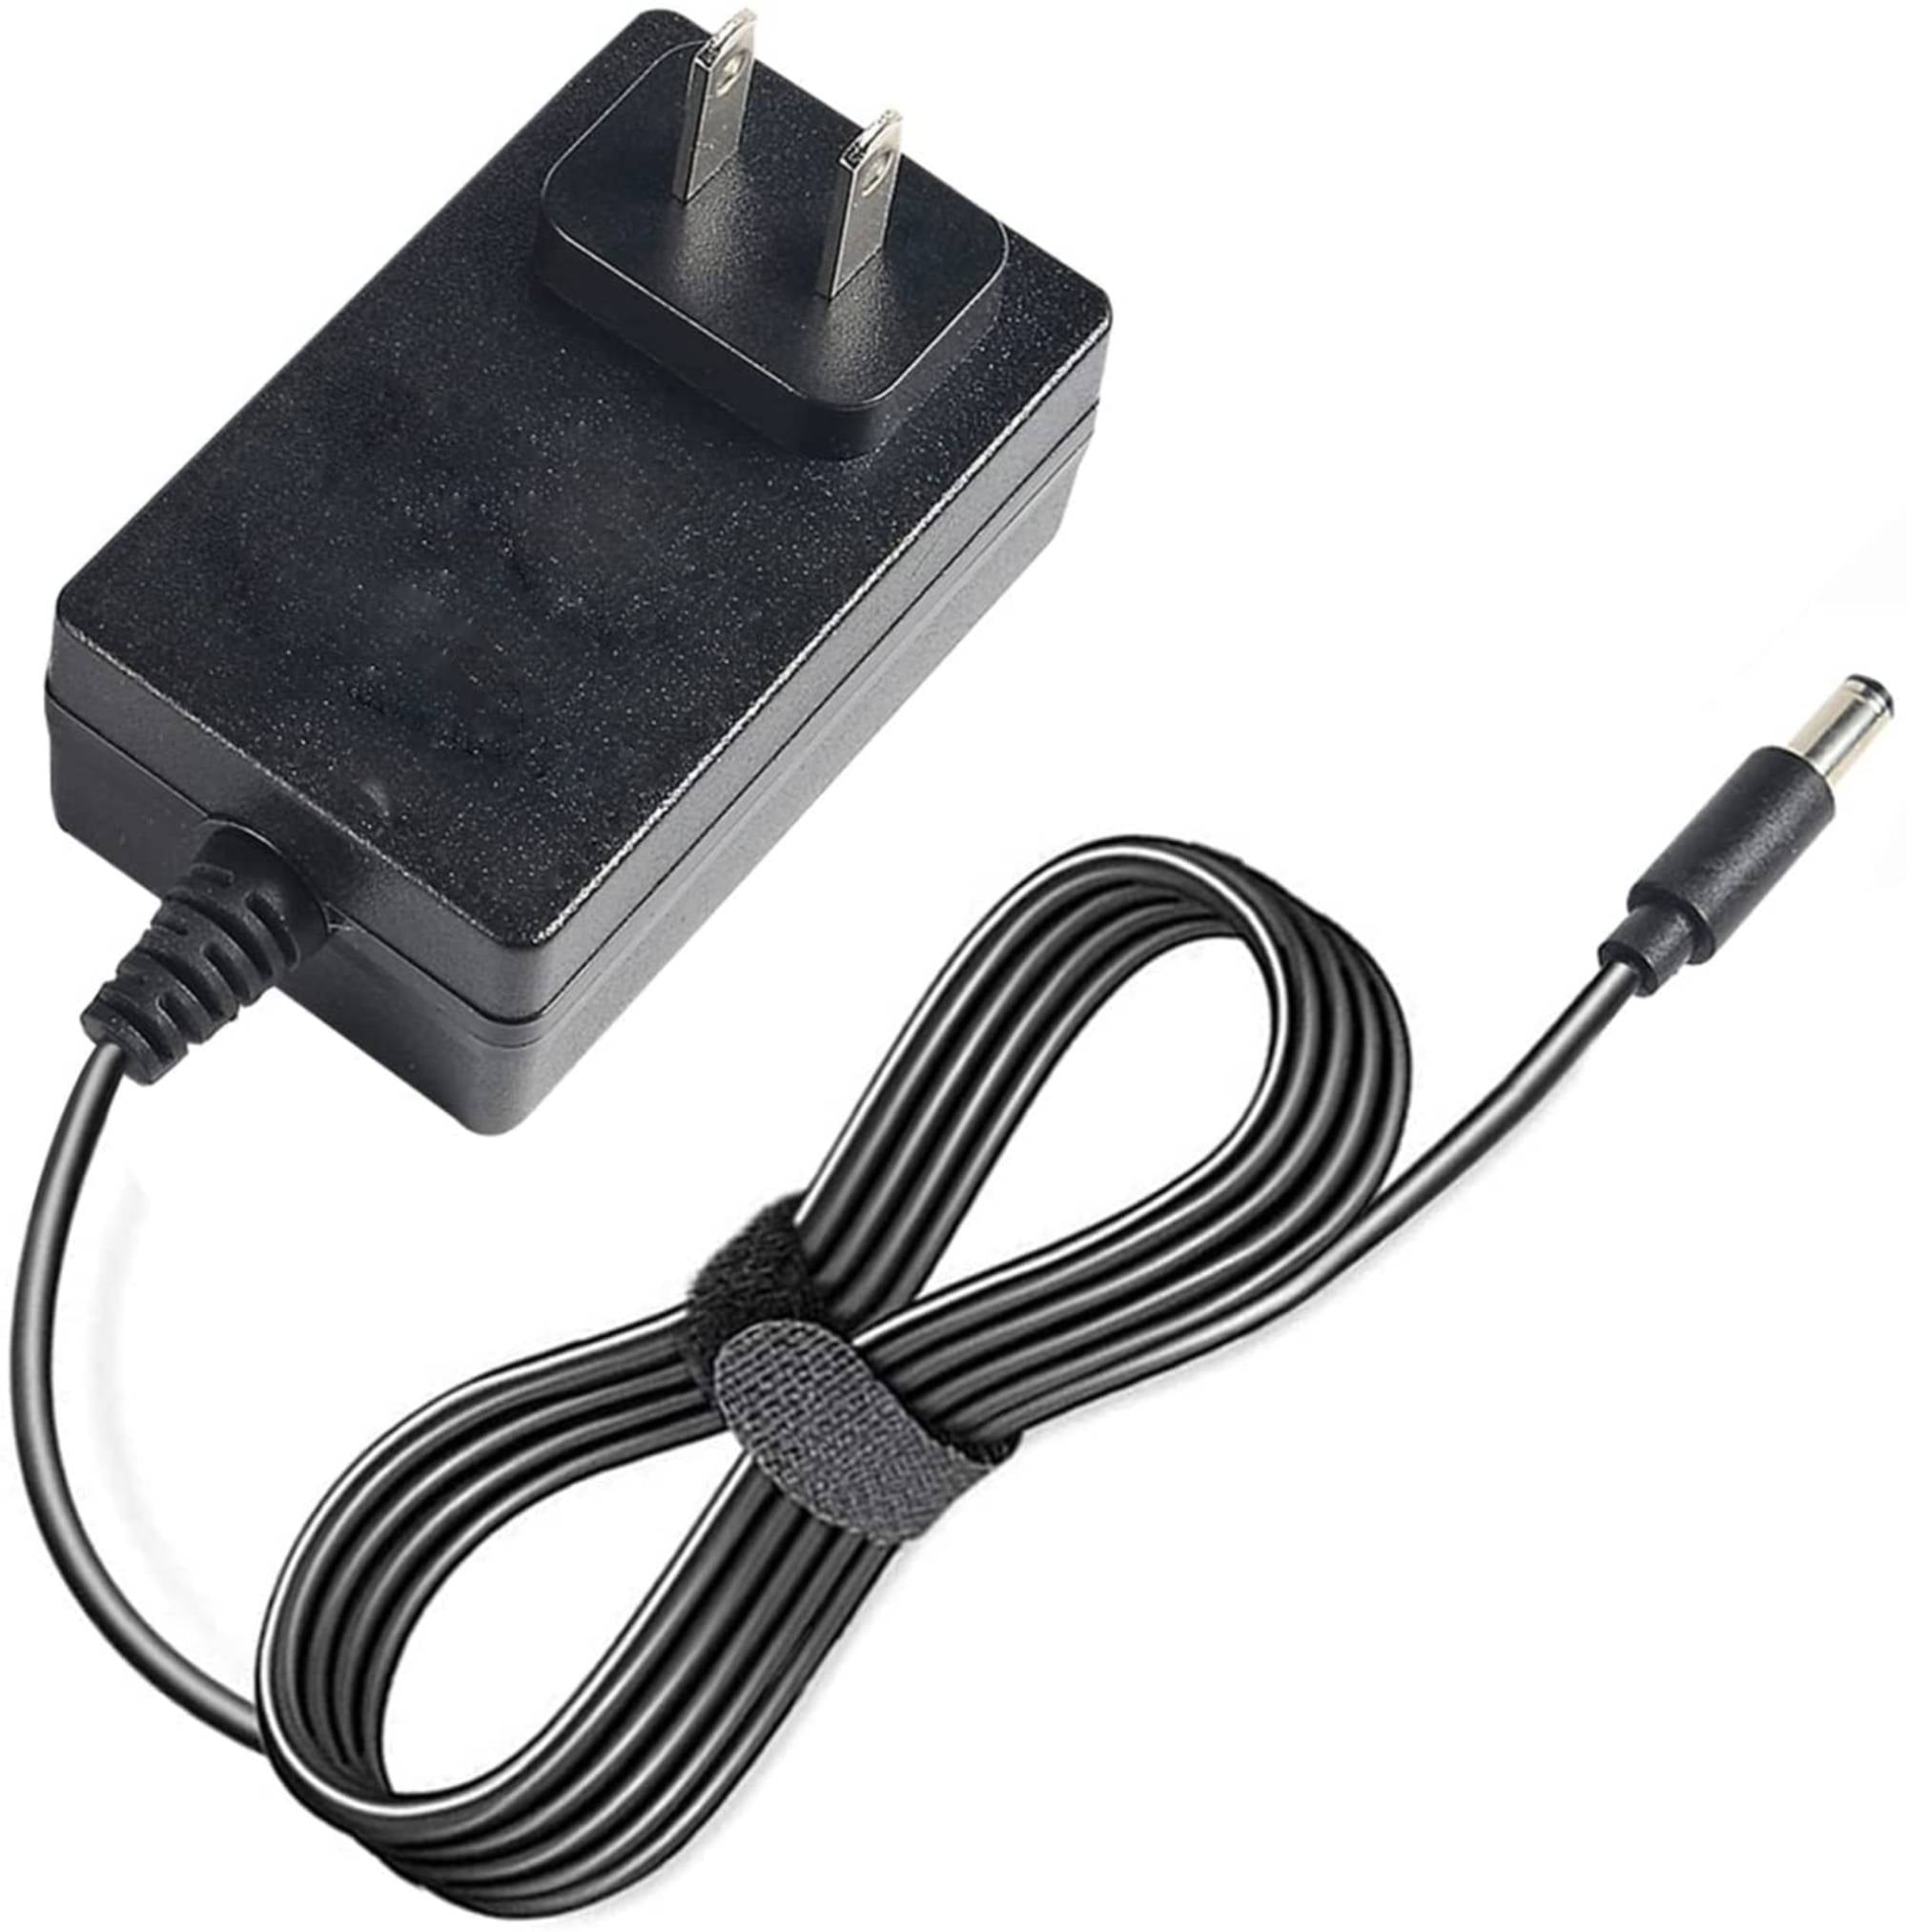 AC DC Adapter for Sling Box Media Slingbox 500 SB500 SB500-100 R39120902106 